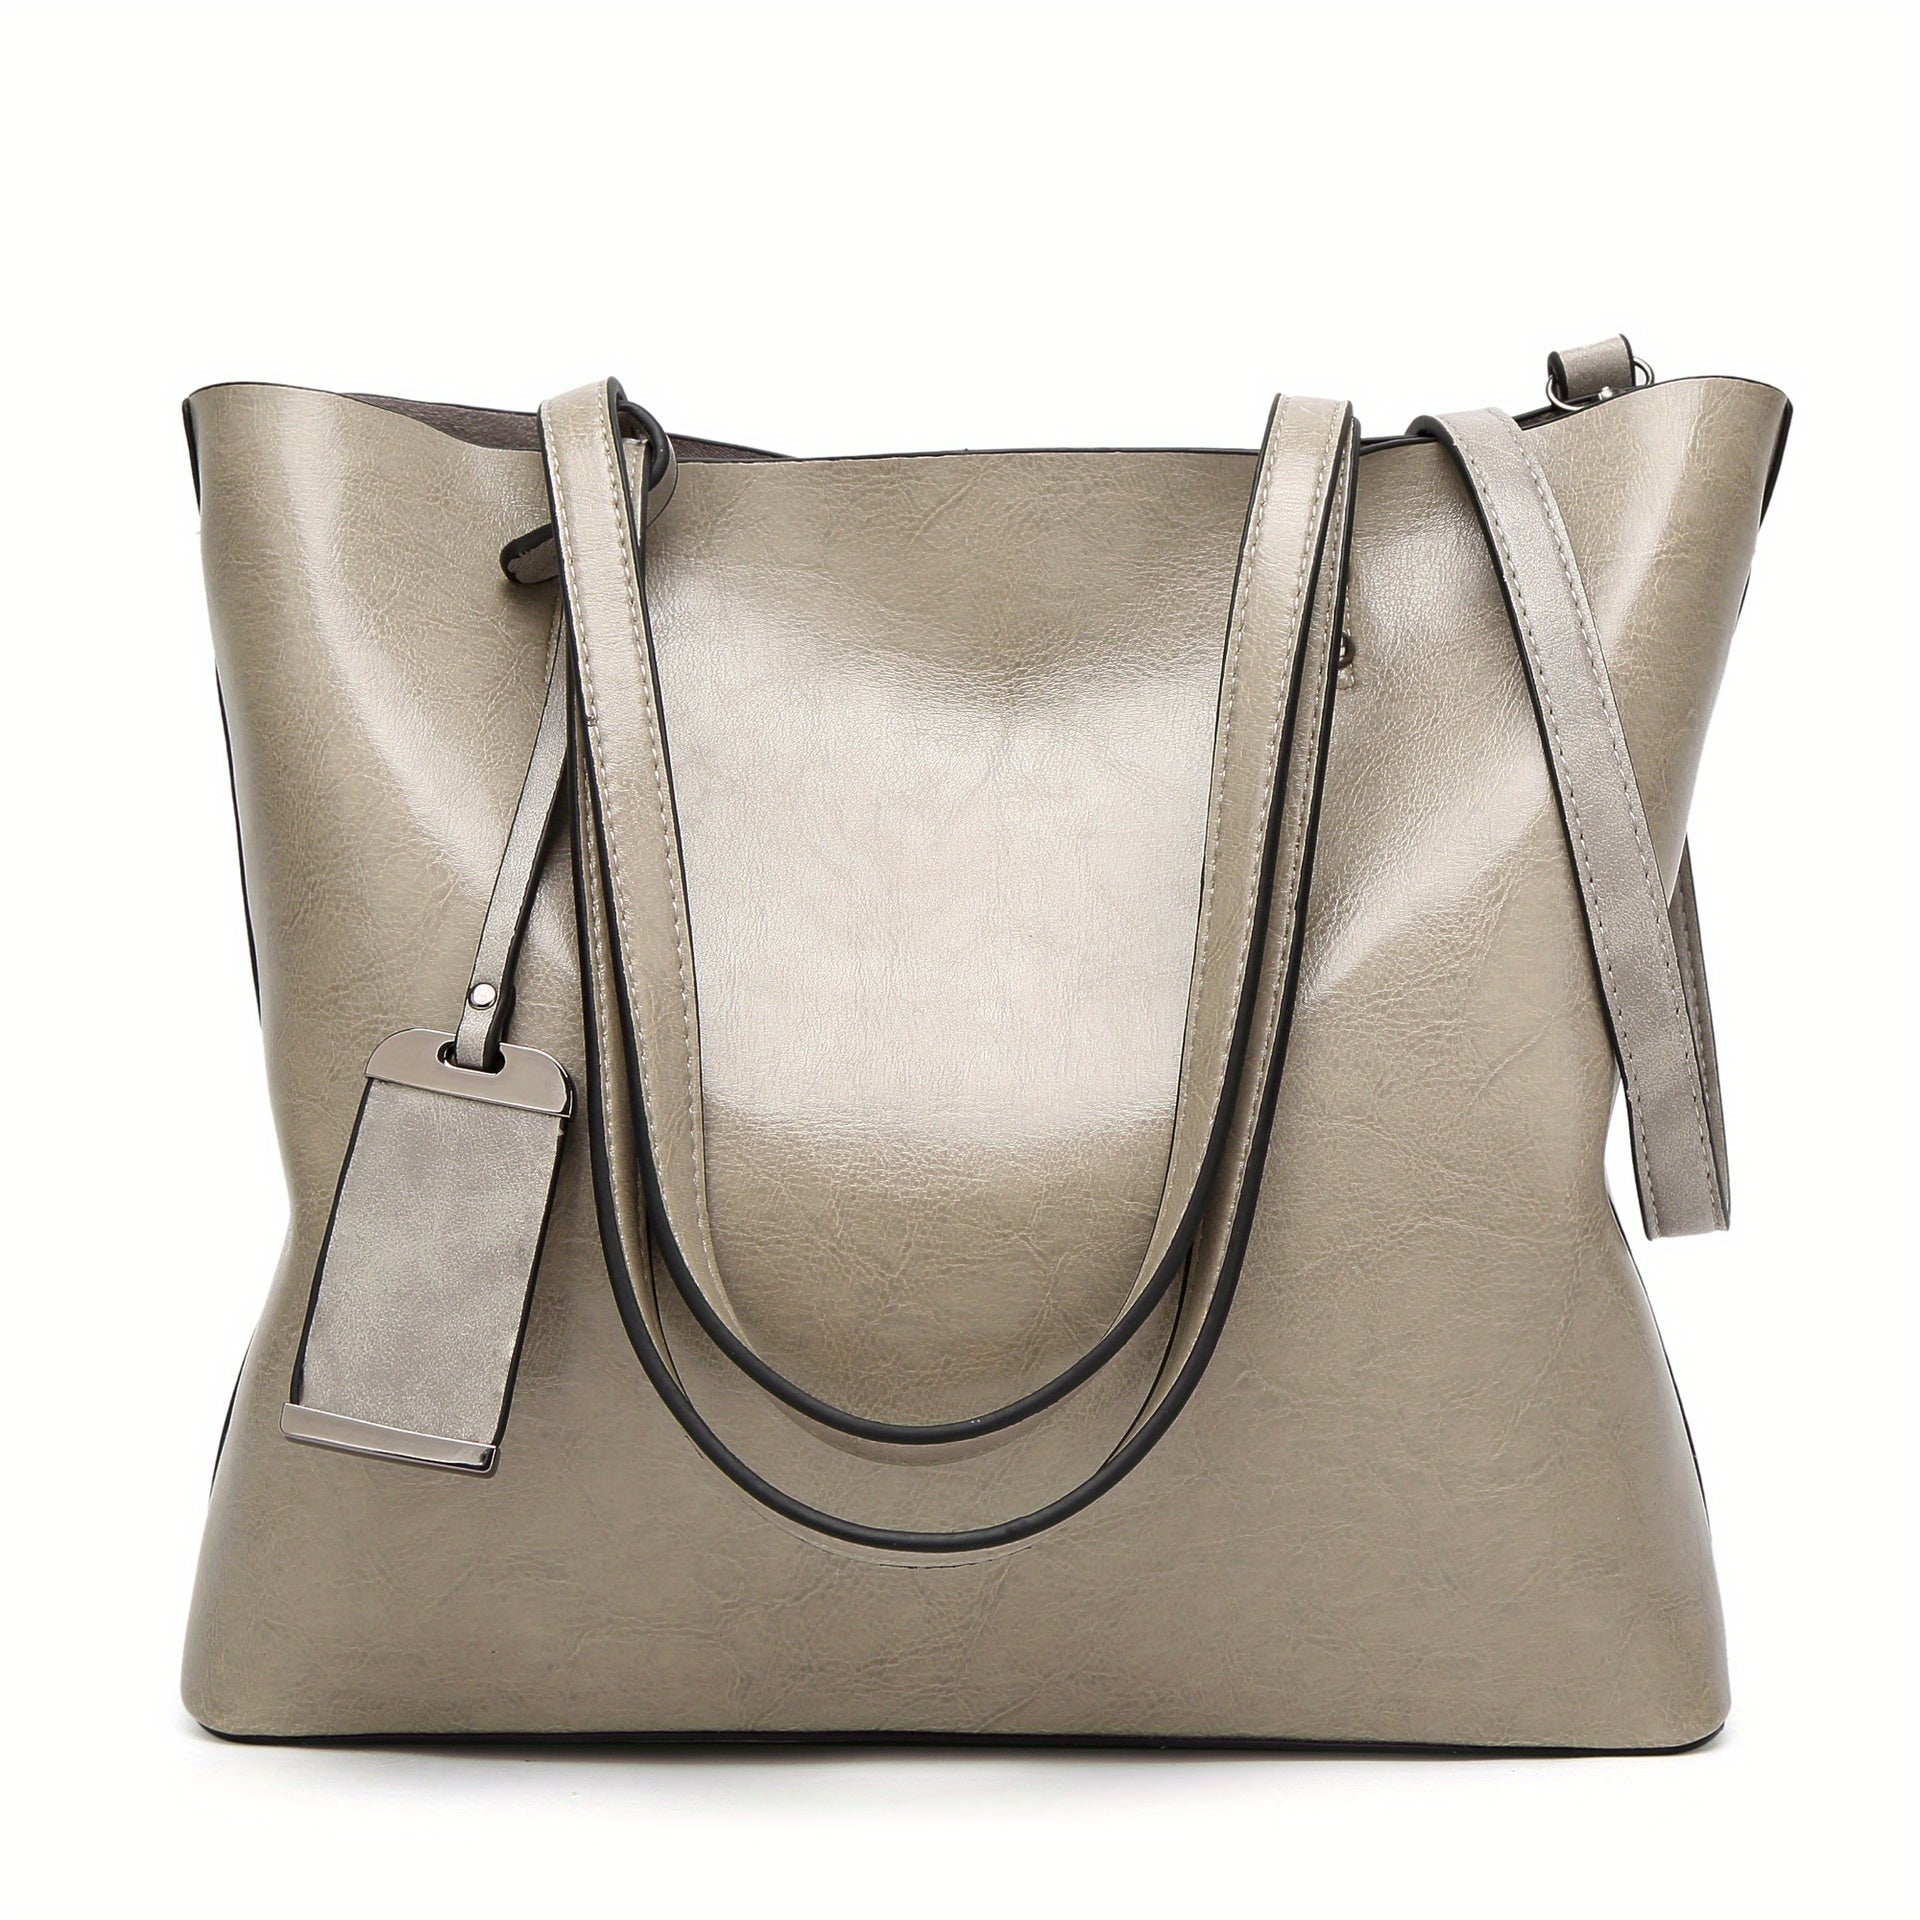 Women's Faux Leather Tote Bag, Large Capacity Shoulder Bag, Handbag